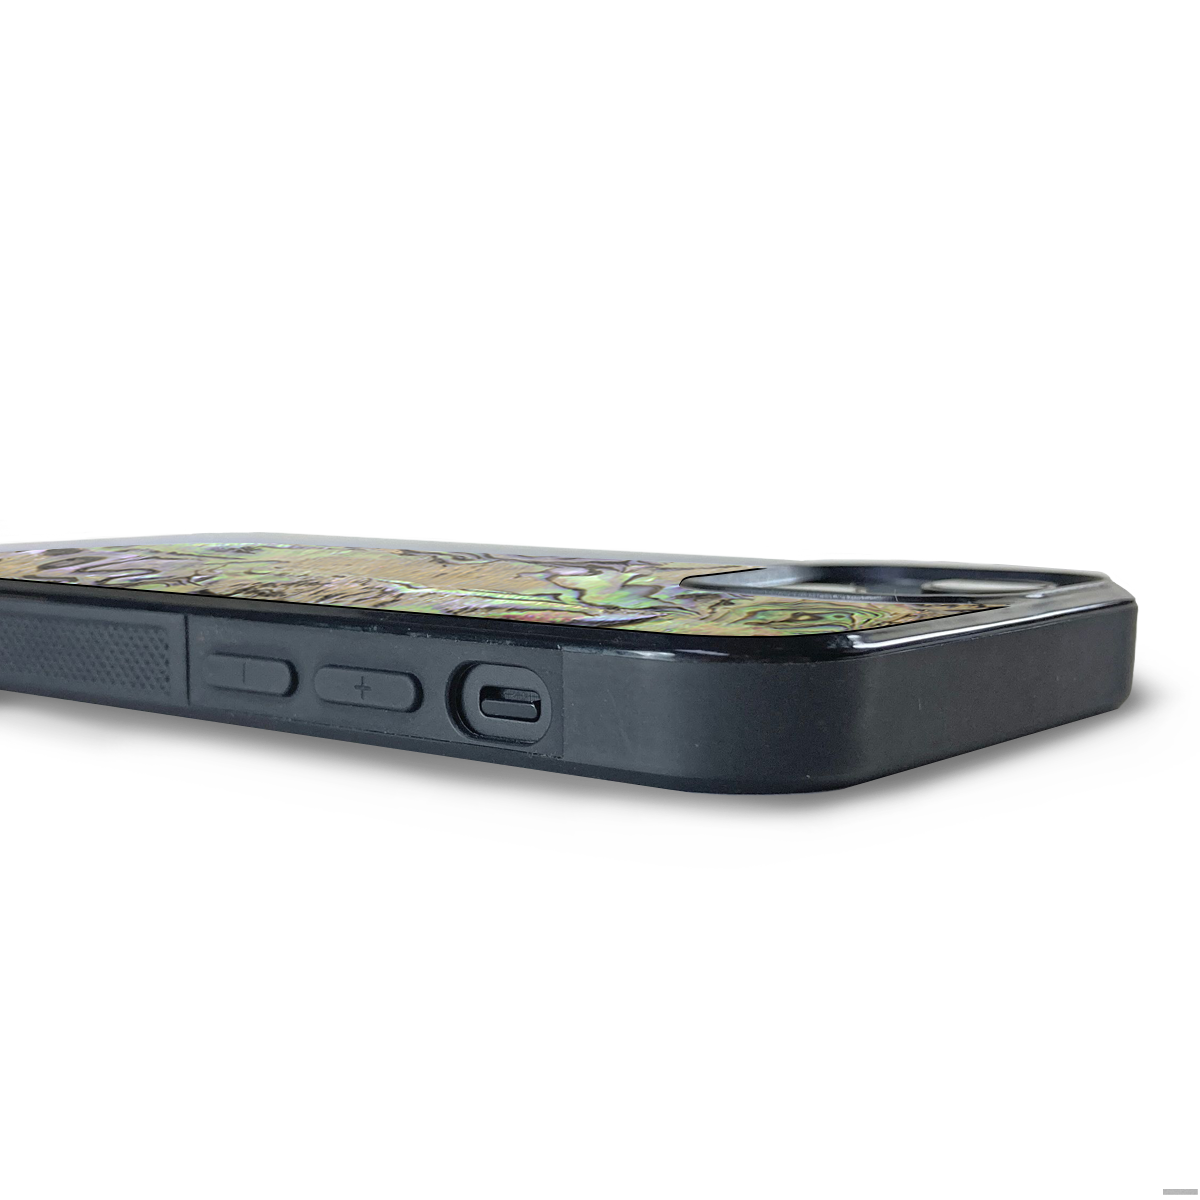 iPhone 15 — Shell Explorer Case